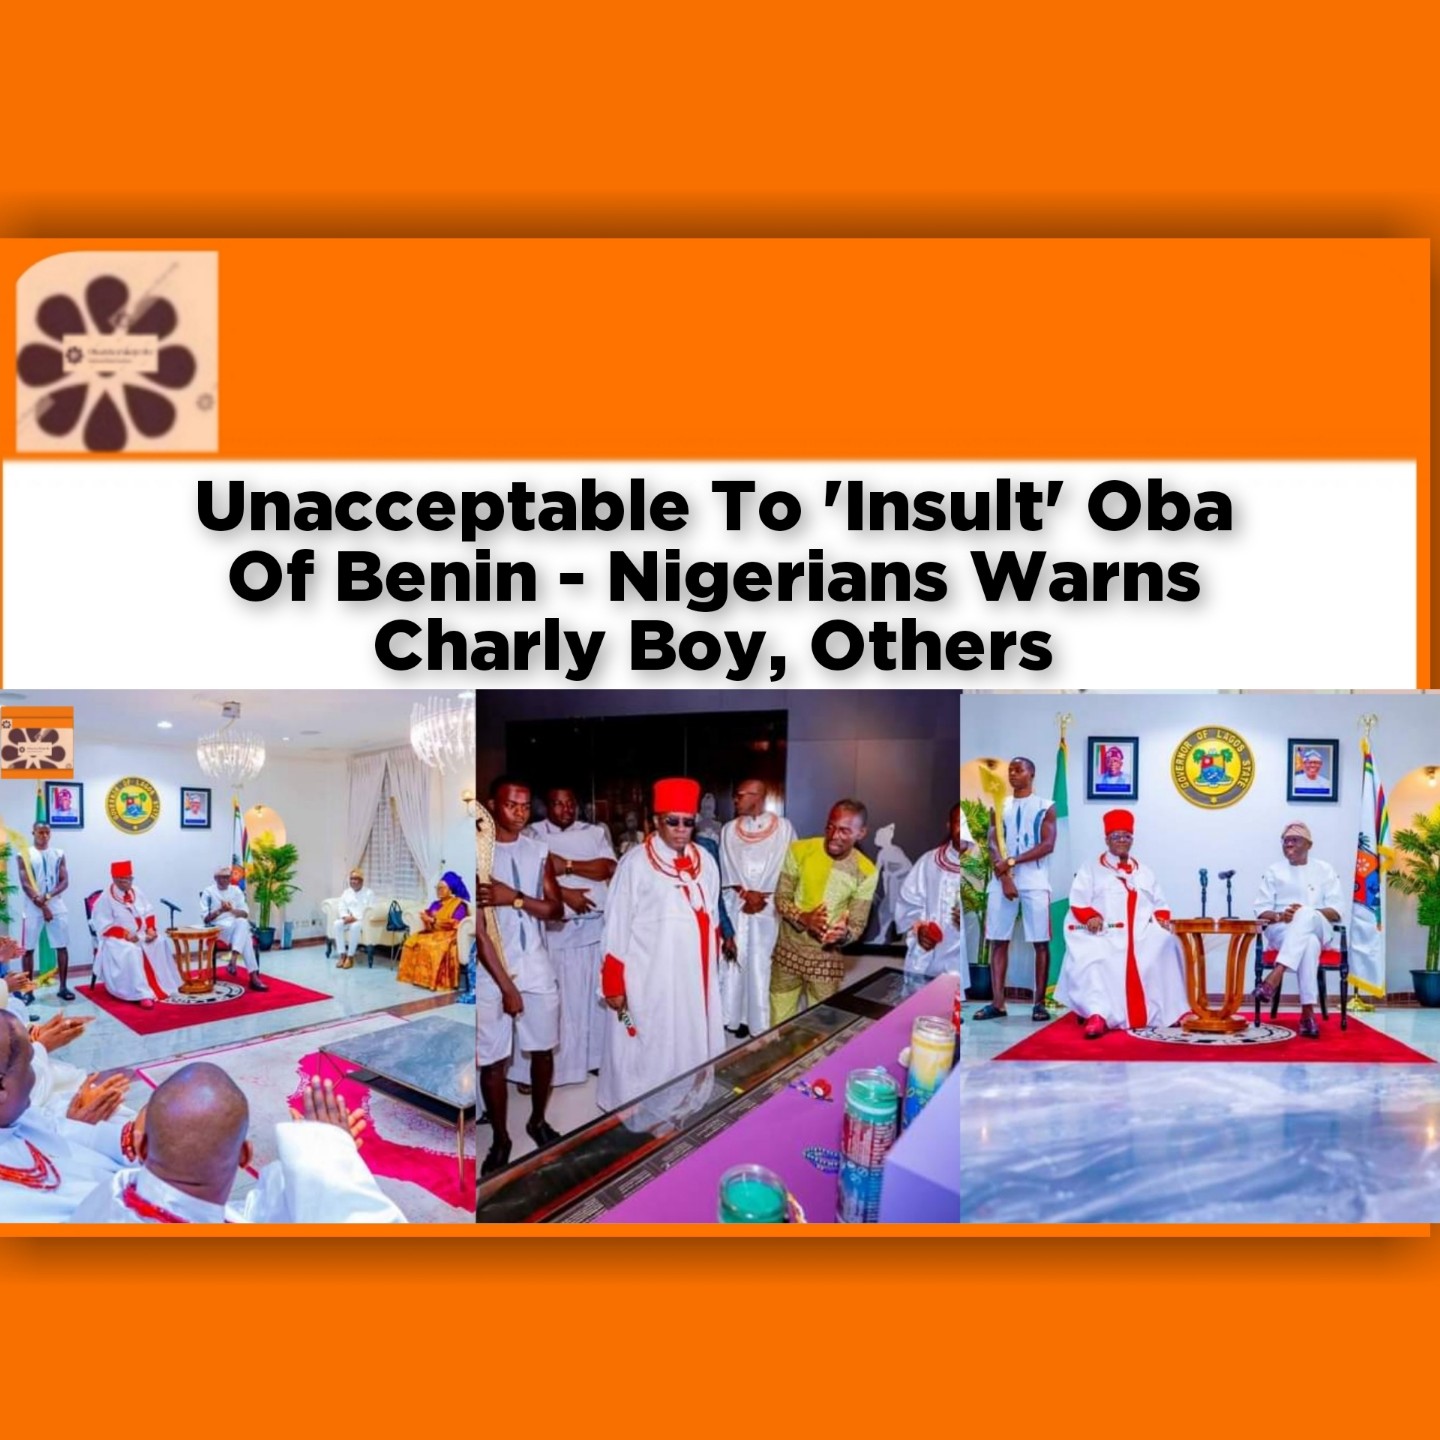 Unacceptable To 'Insult' Oba Of Benin - Nigerians Warns Charly Boy, Others ~ OsazuwaAkonedo #Omdurman